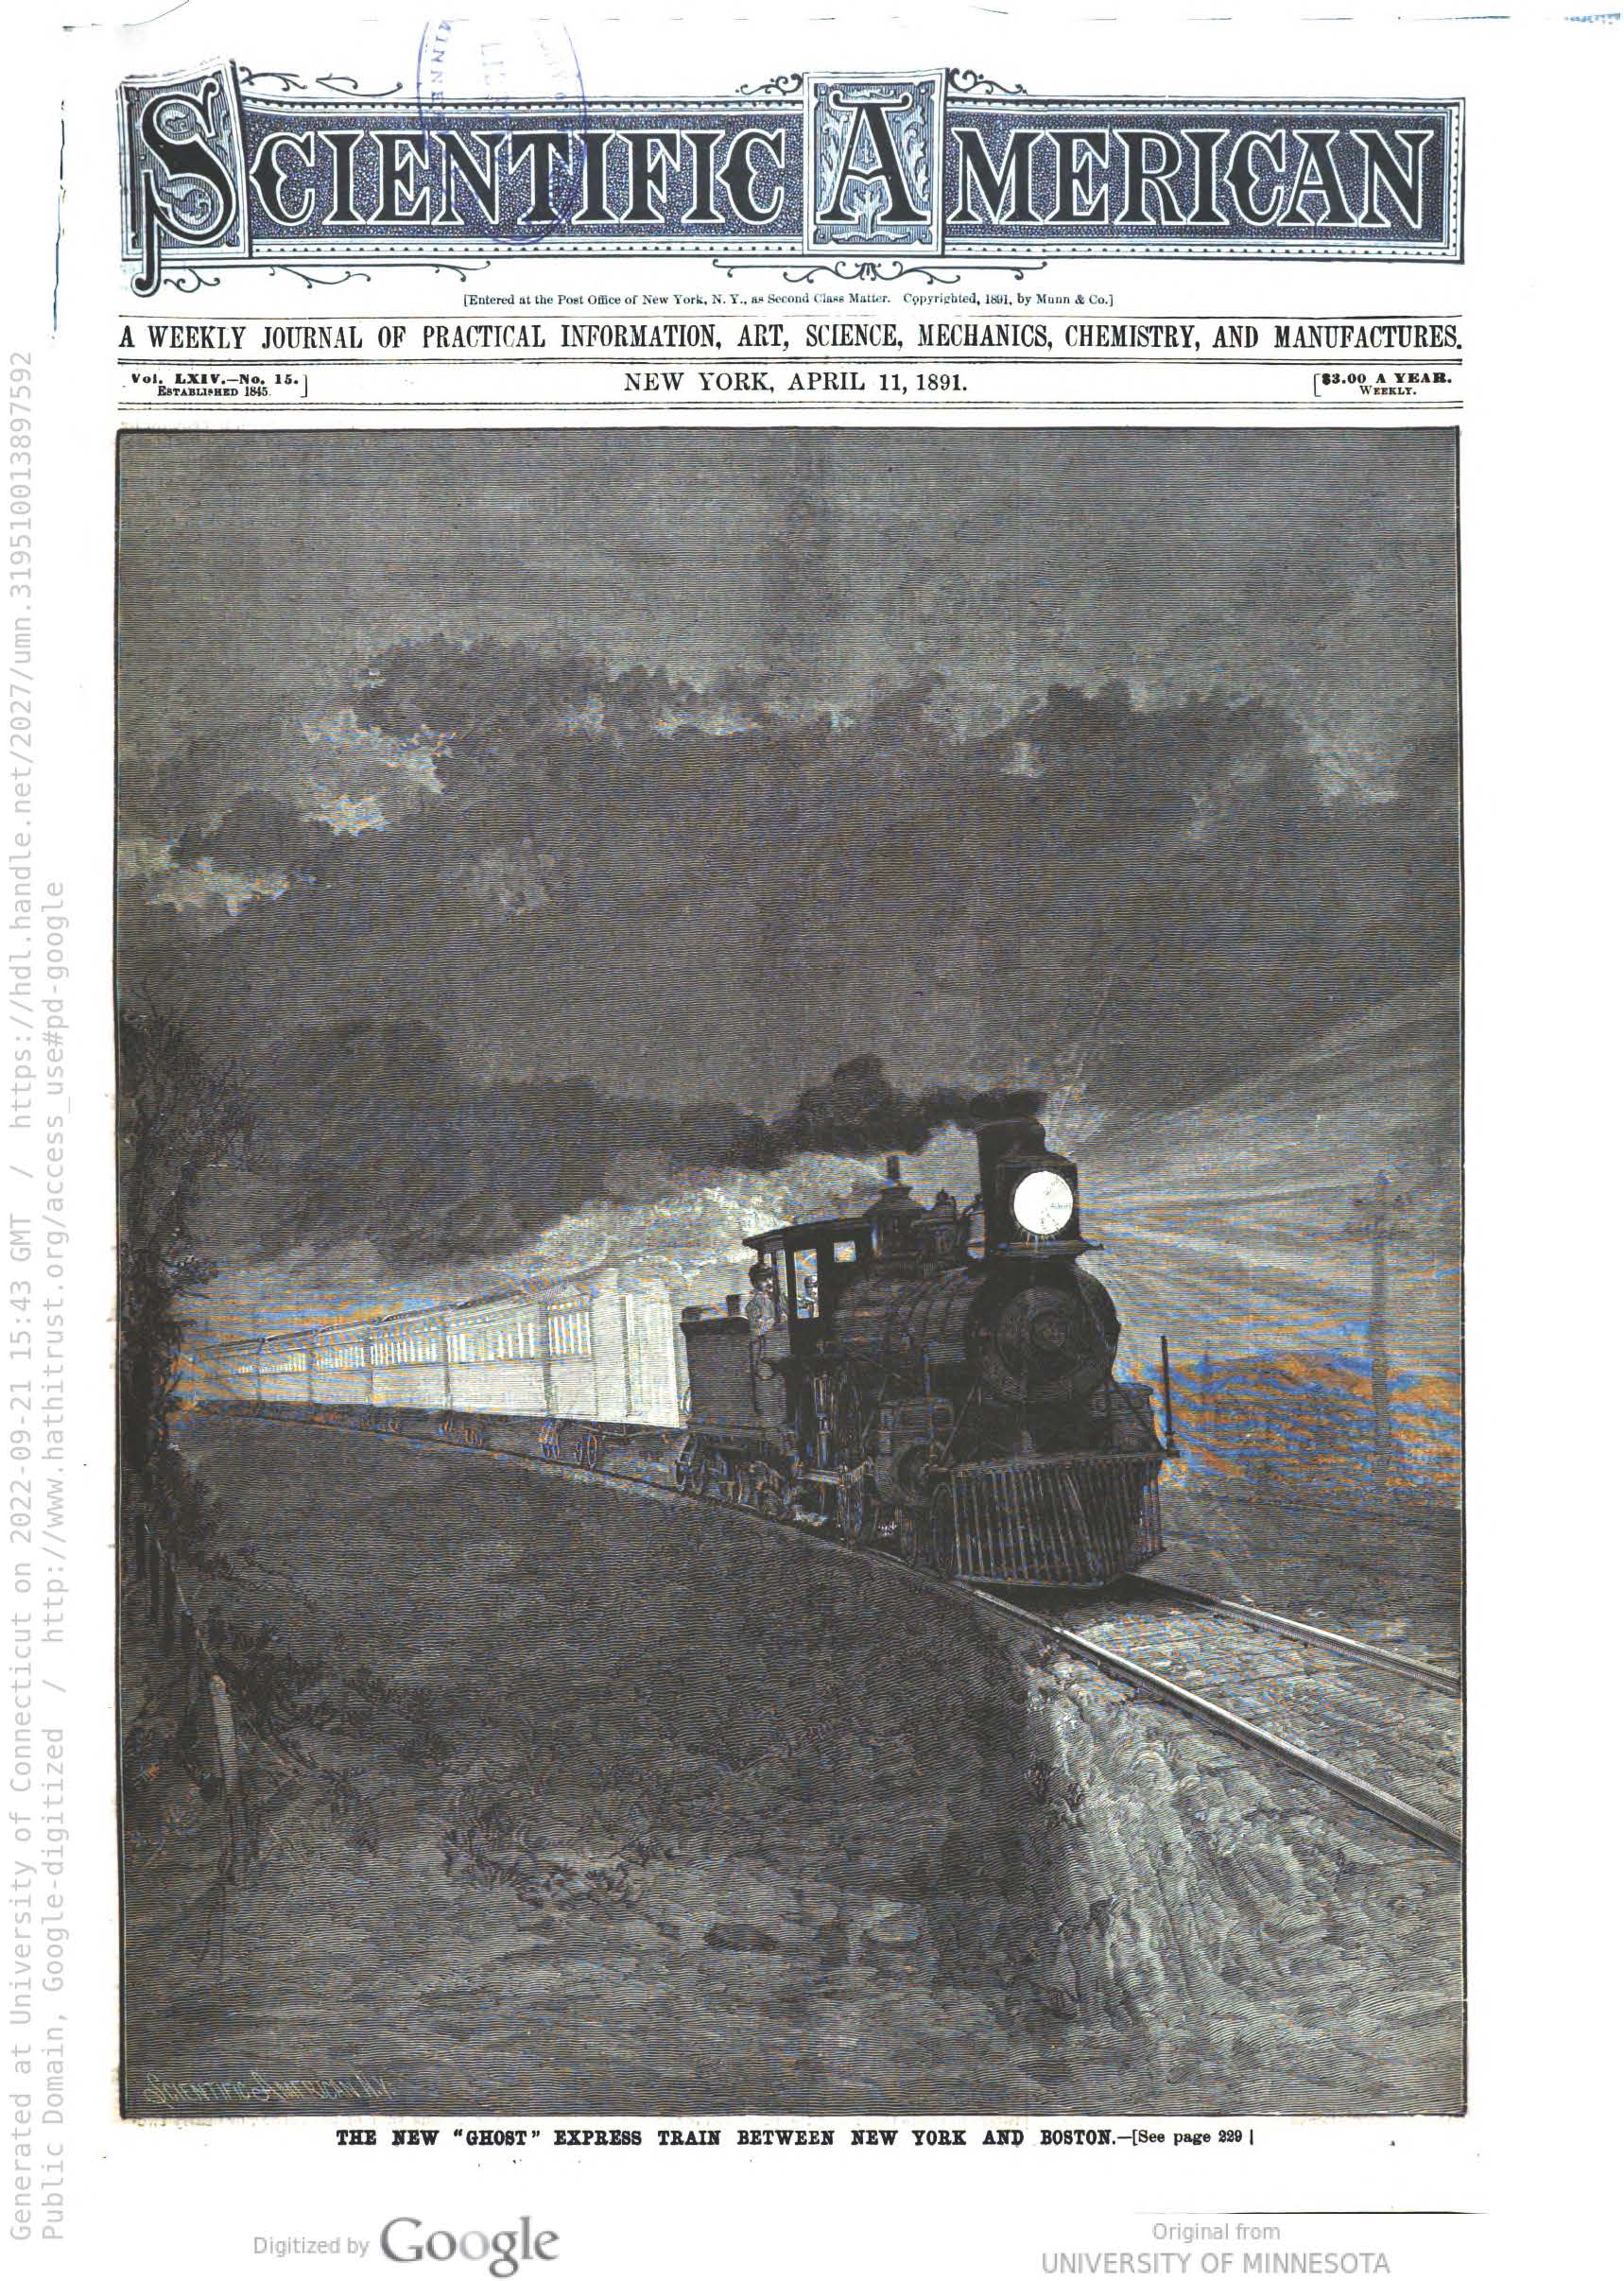 April 11, 1891, cover of Scientific American showing the White Train